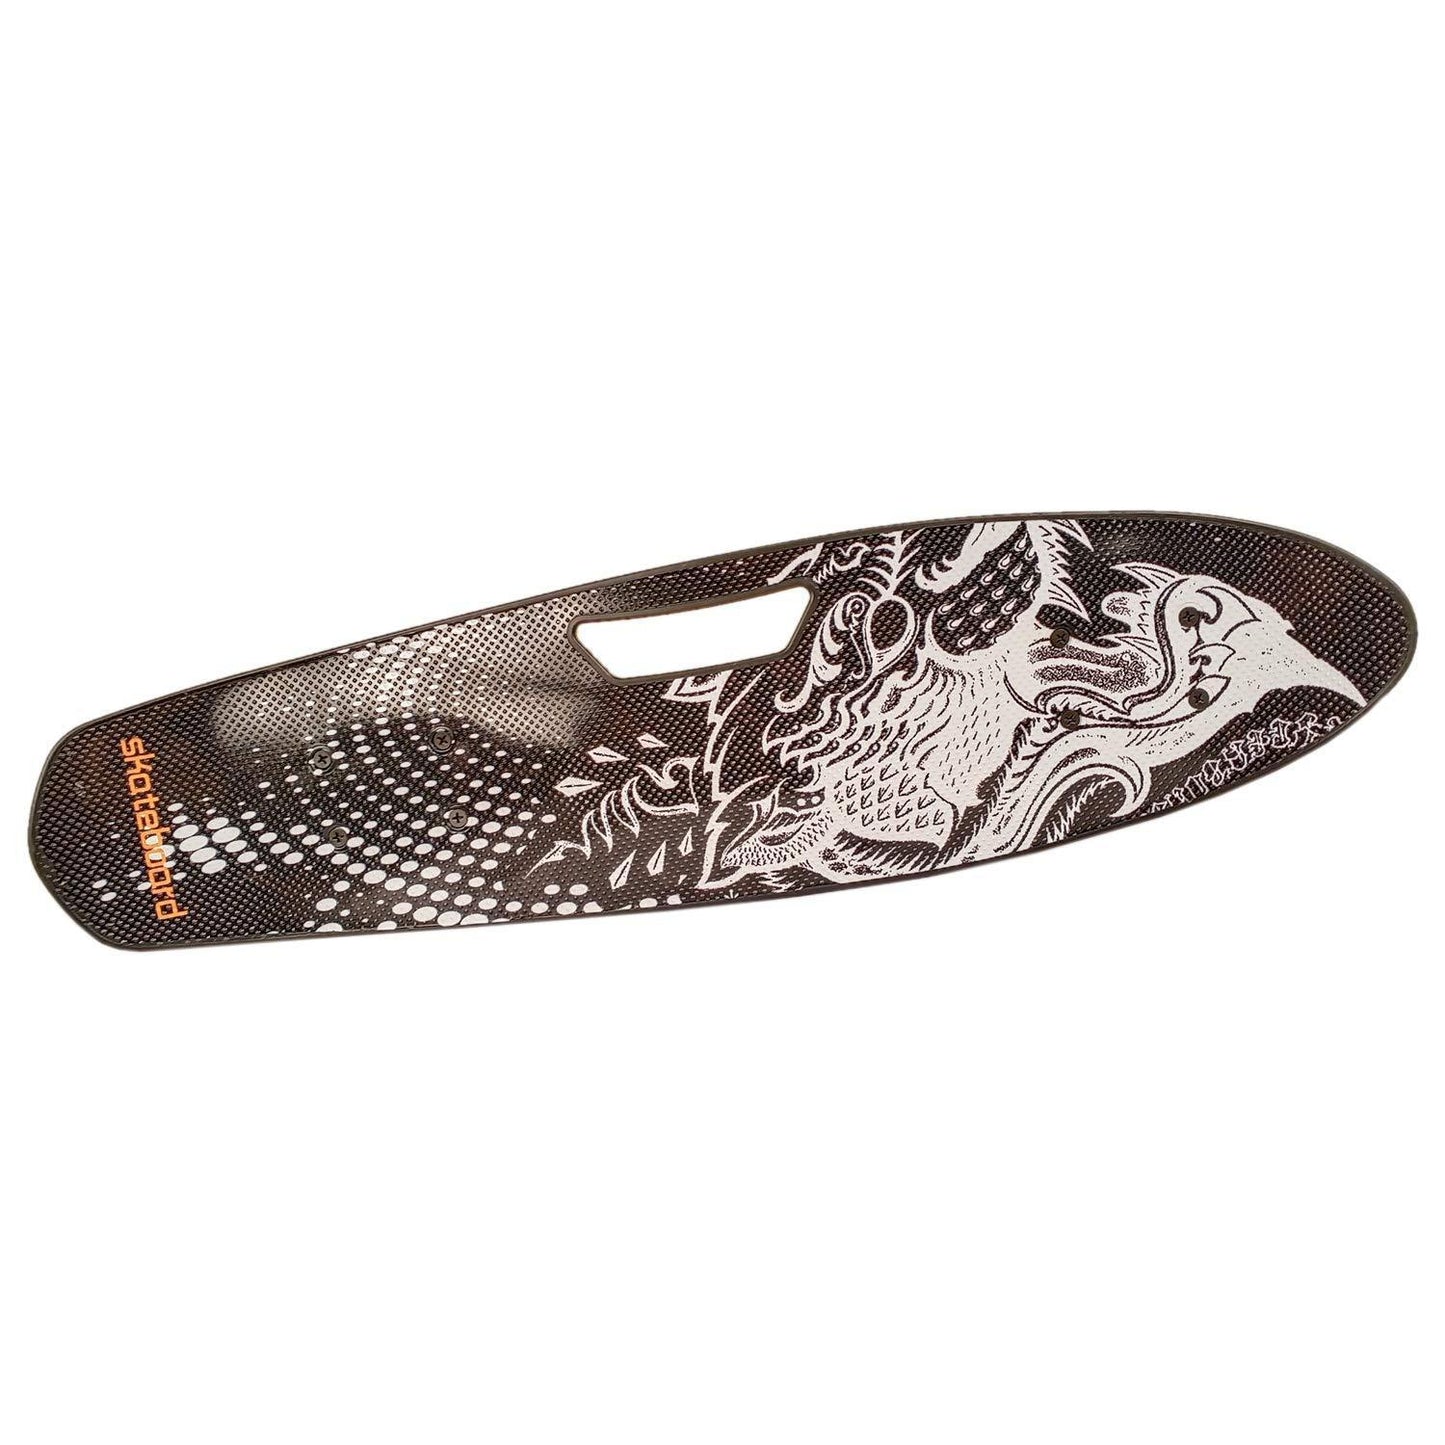 Prokick Senior Skateboard 002 Fibre Black Multi - Best Price online Prokicksports.com